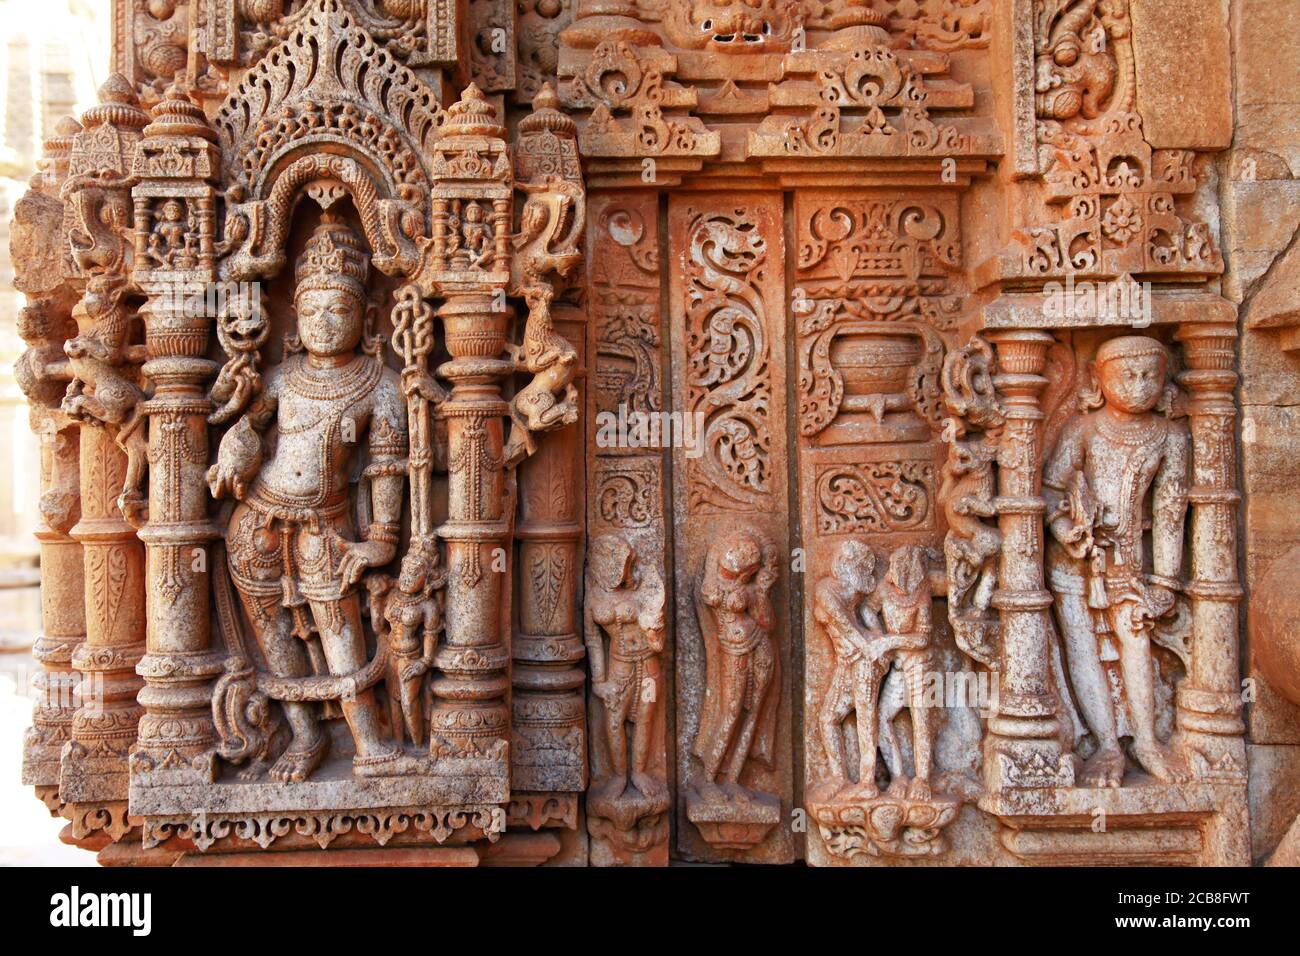 Incredibili sculture in pietra nel tempio indiano Sahastra Bahu (SAS-Bahu) a Nagda, Udaipur, Rajasthan, India. Foto Stock